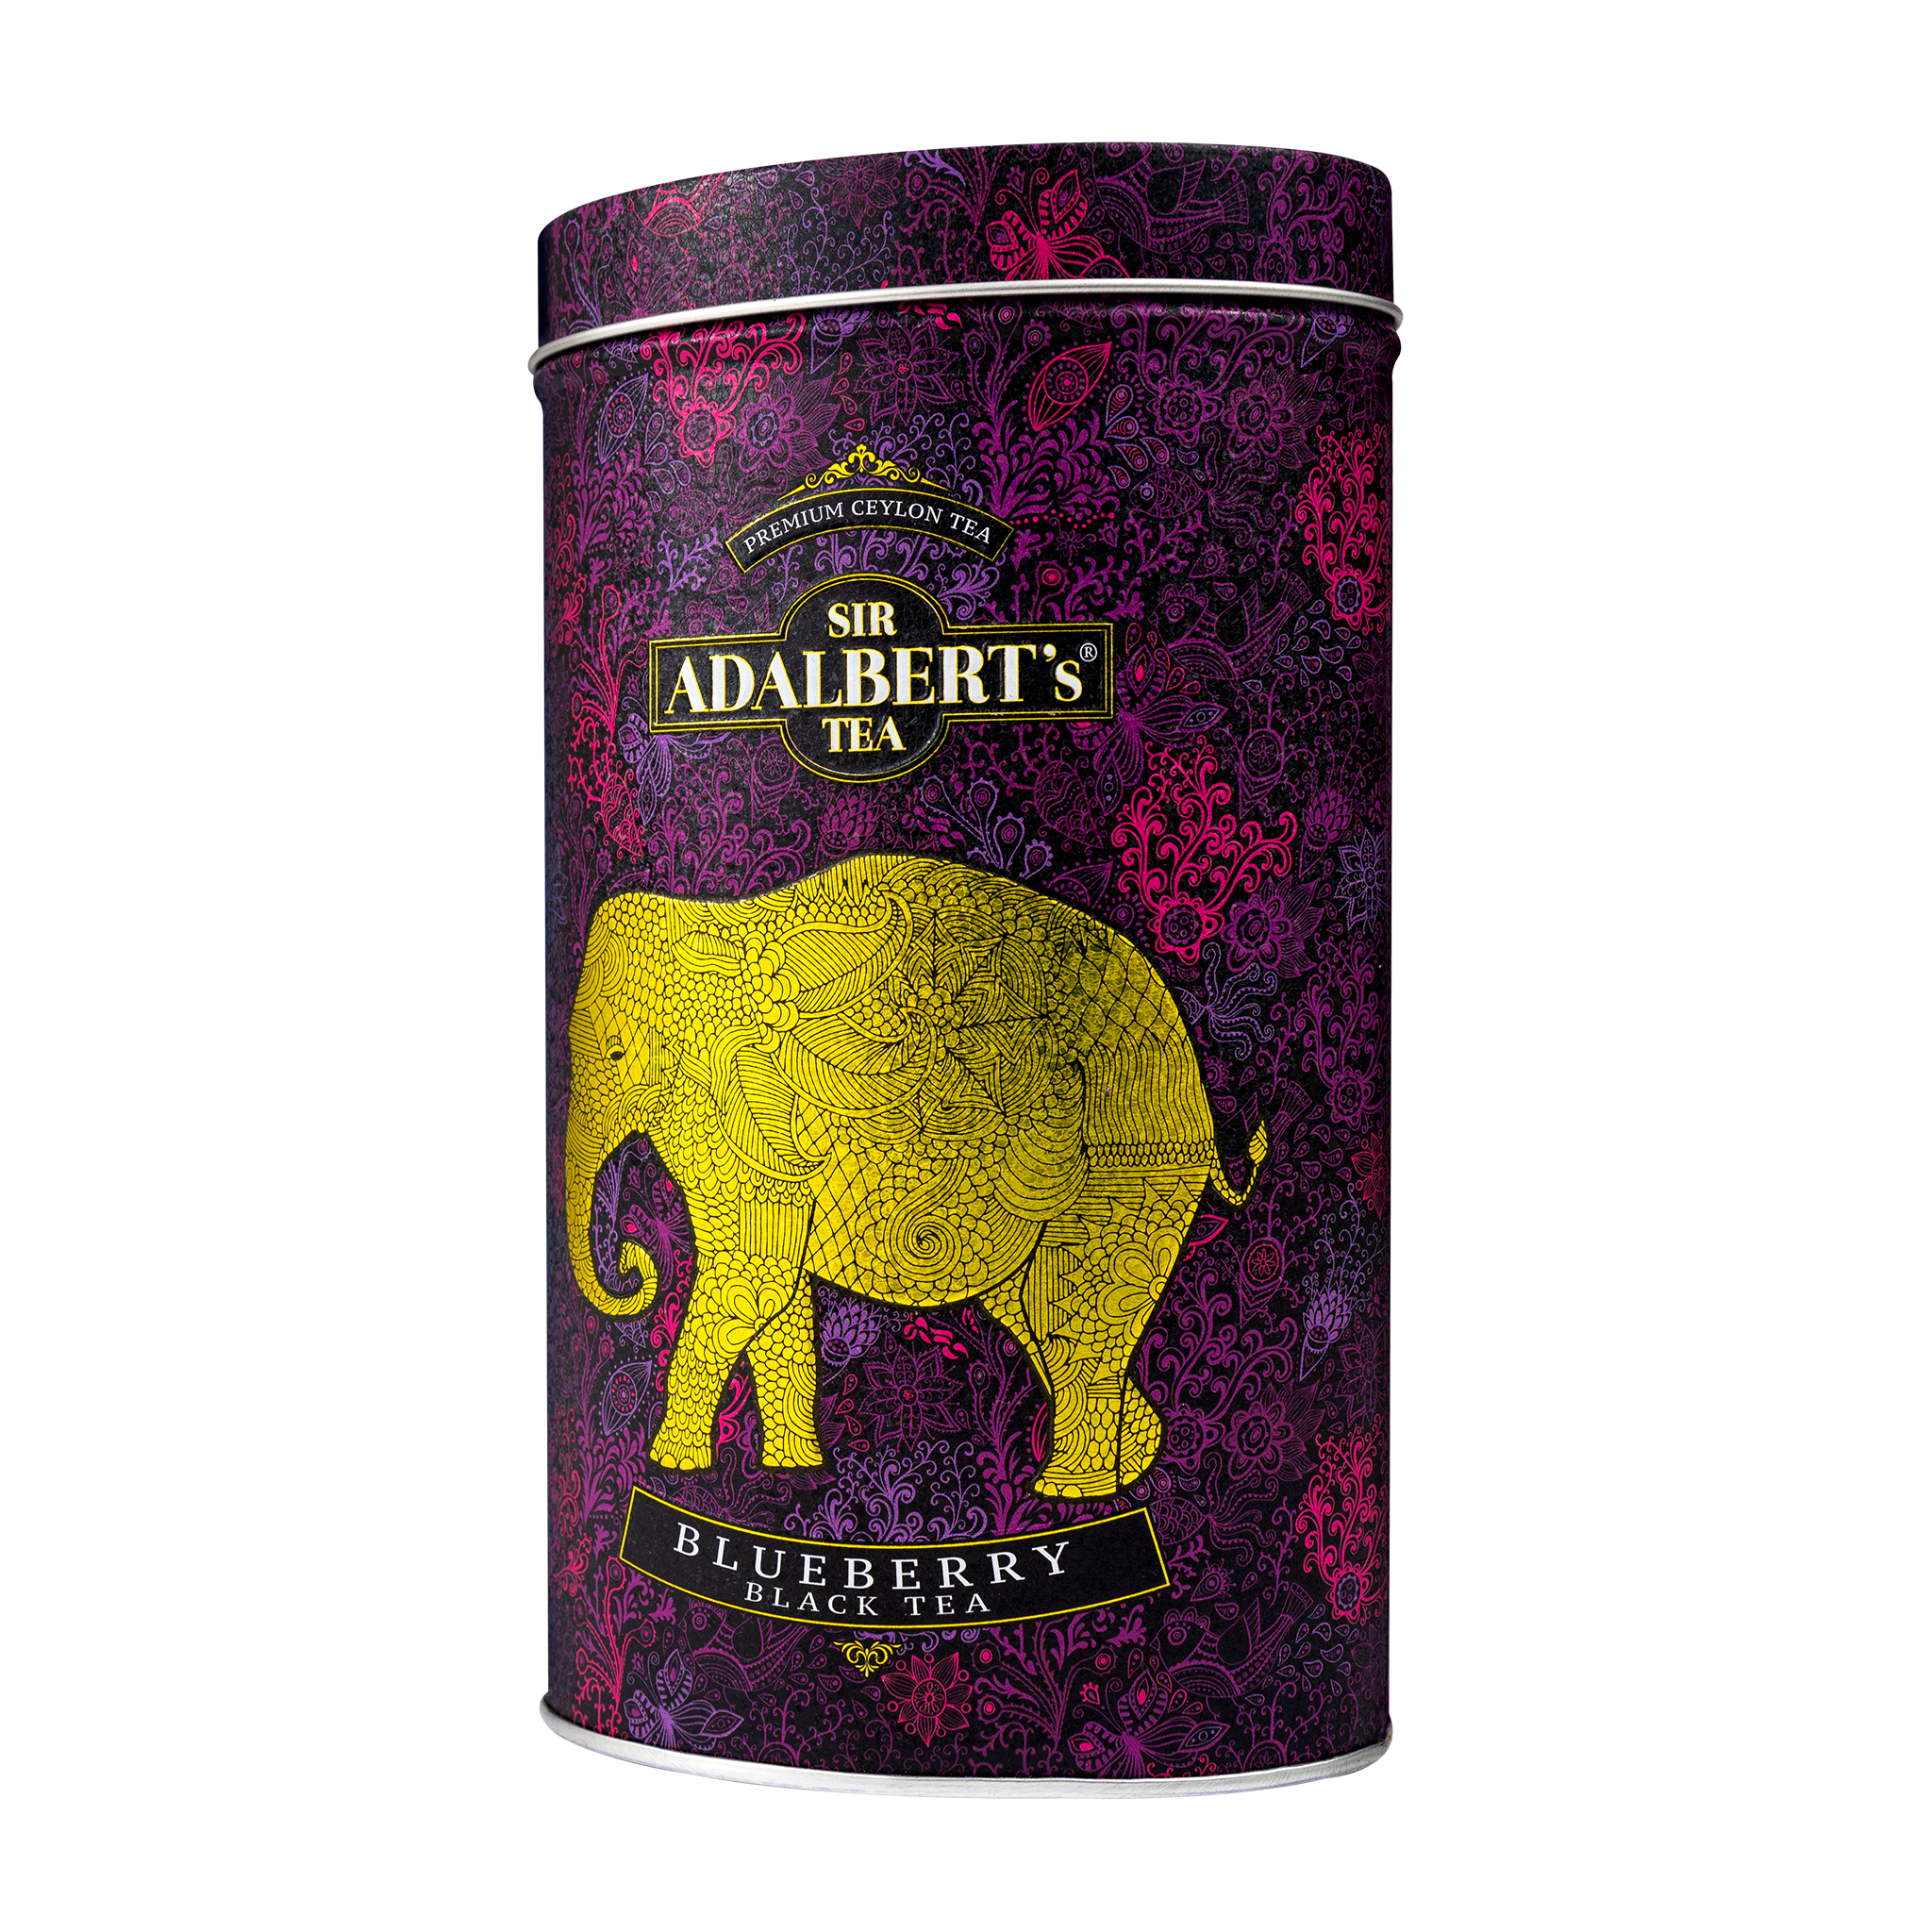 Adalbert's Tea BLUEBERRY - leaf 110g in a can